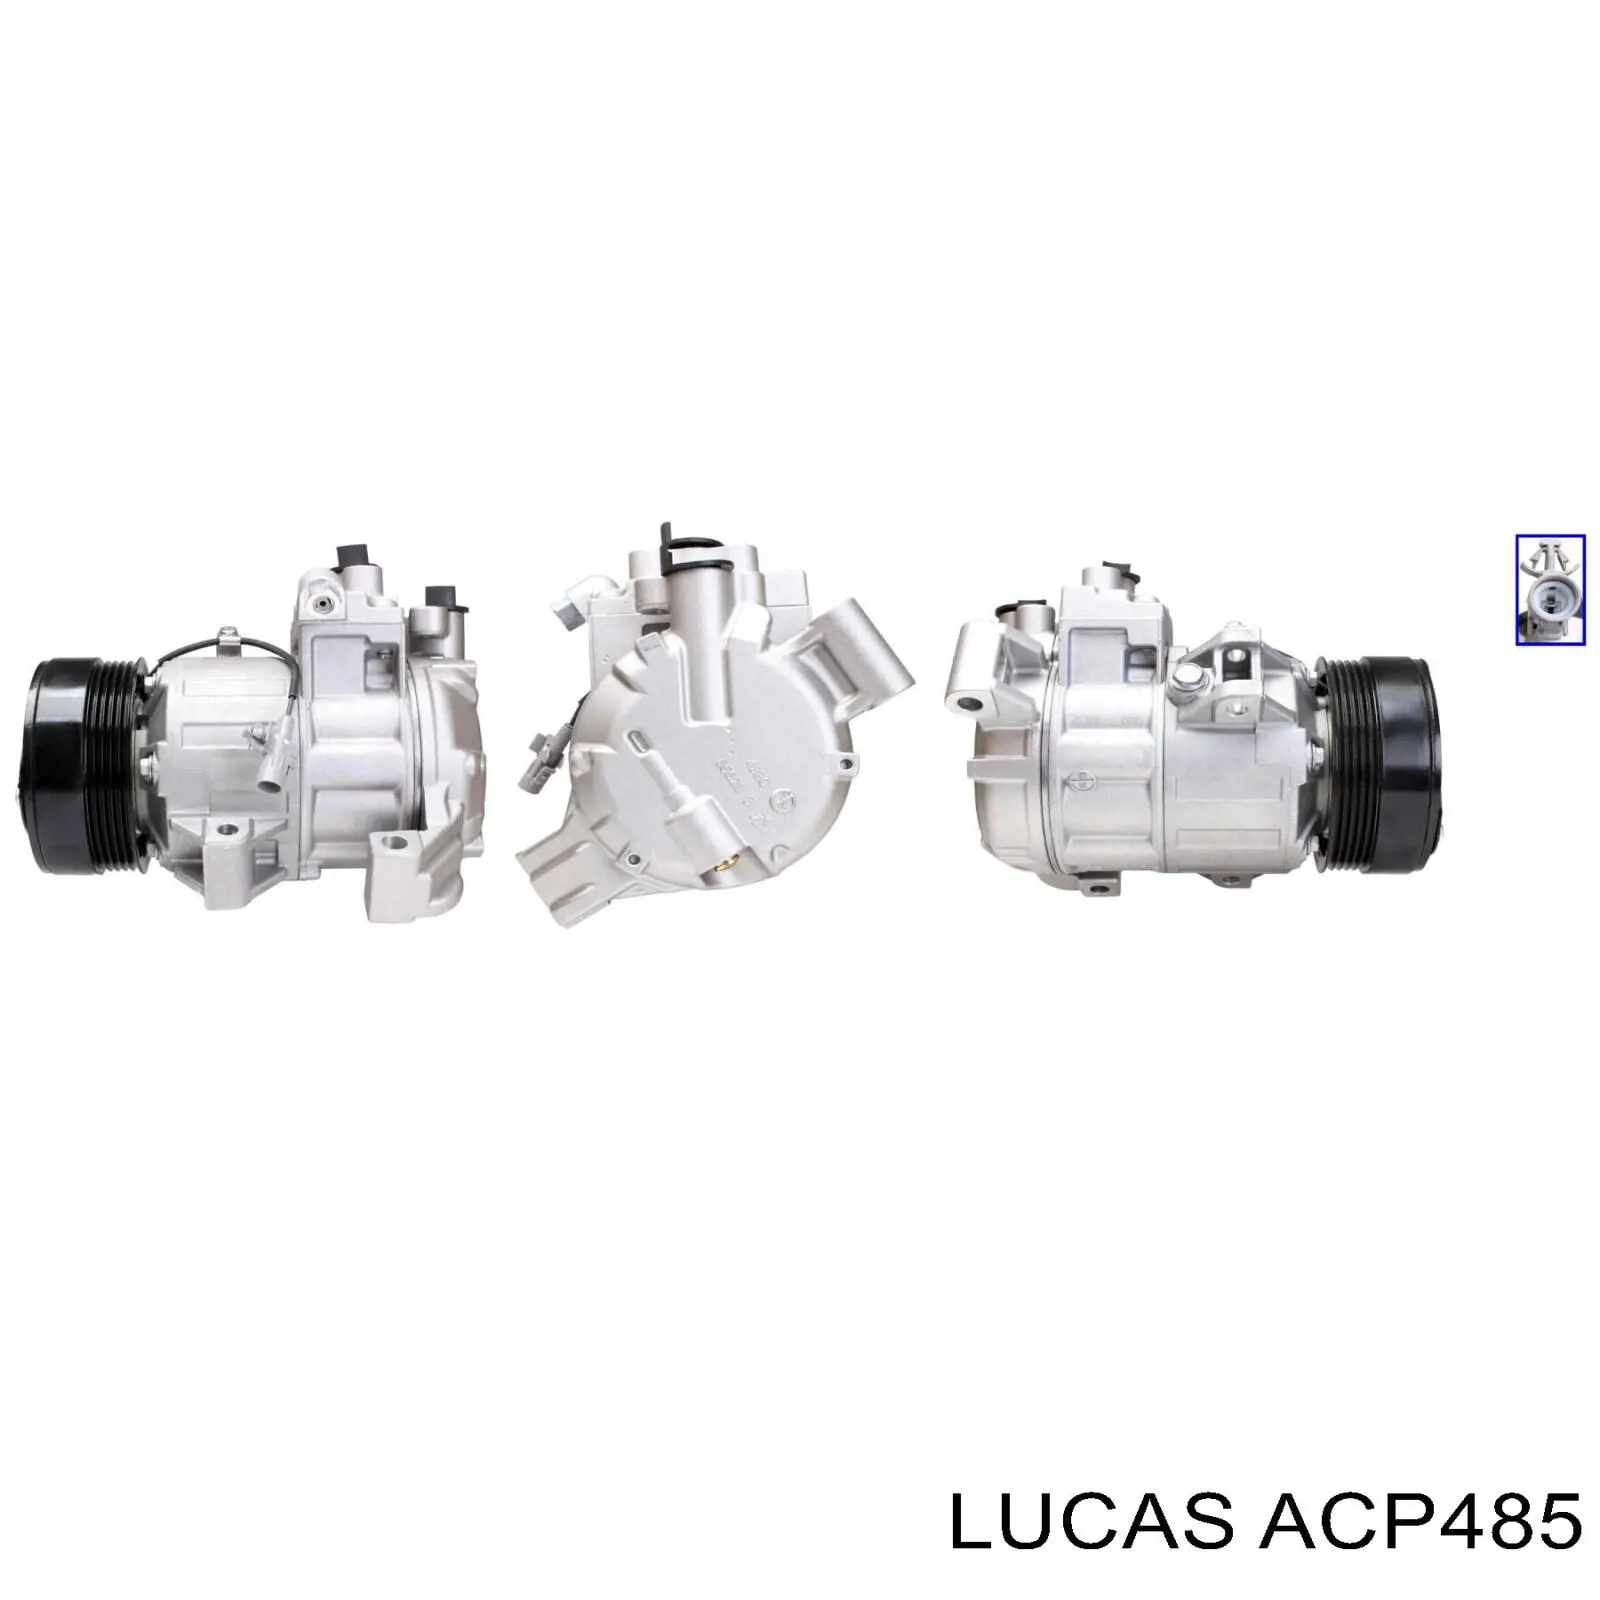 Compresor de aire acondicionado ACP485 Lucas